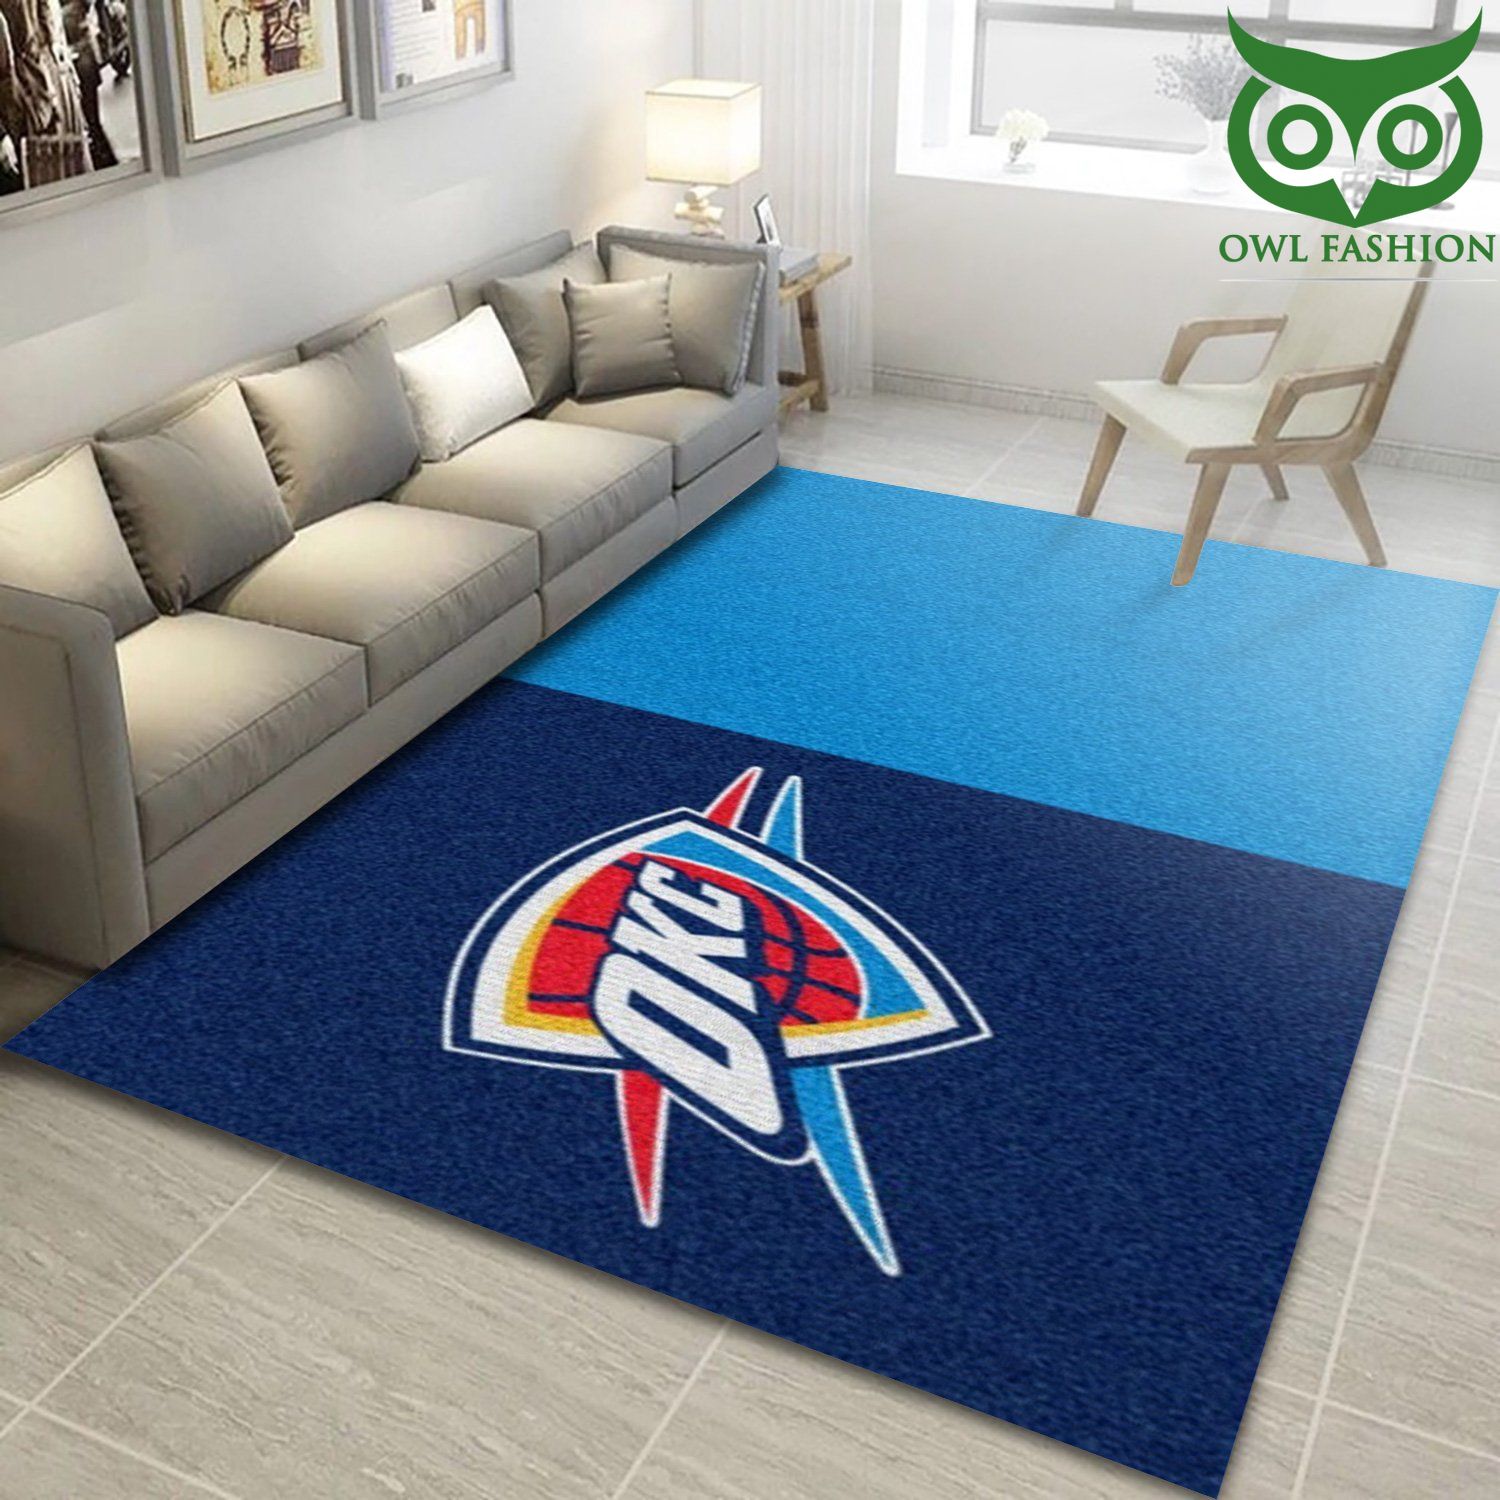 Oklahoma City Thunder Nba Logo carpet rug Home and floor Decor